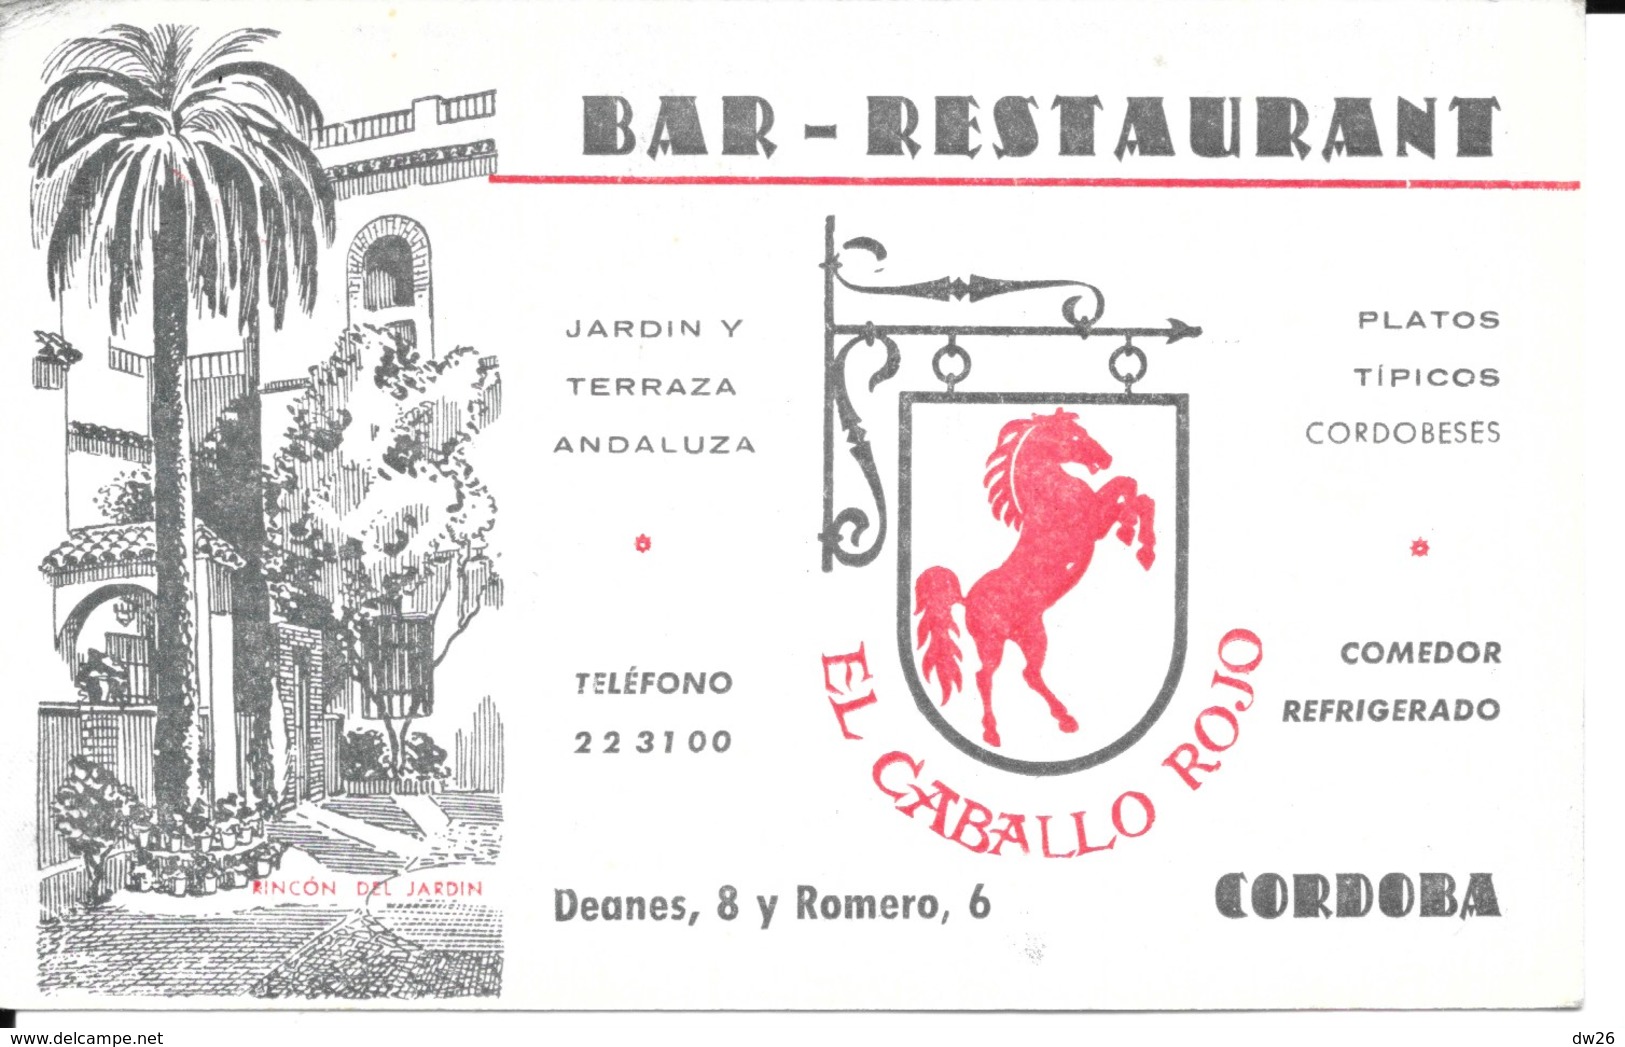 Carte De Visite Publicitaire - Bar-Restaurant El Caballo Rojo, Cordoba (Jardin Y Terraza Andaluza) - Visitenkarten